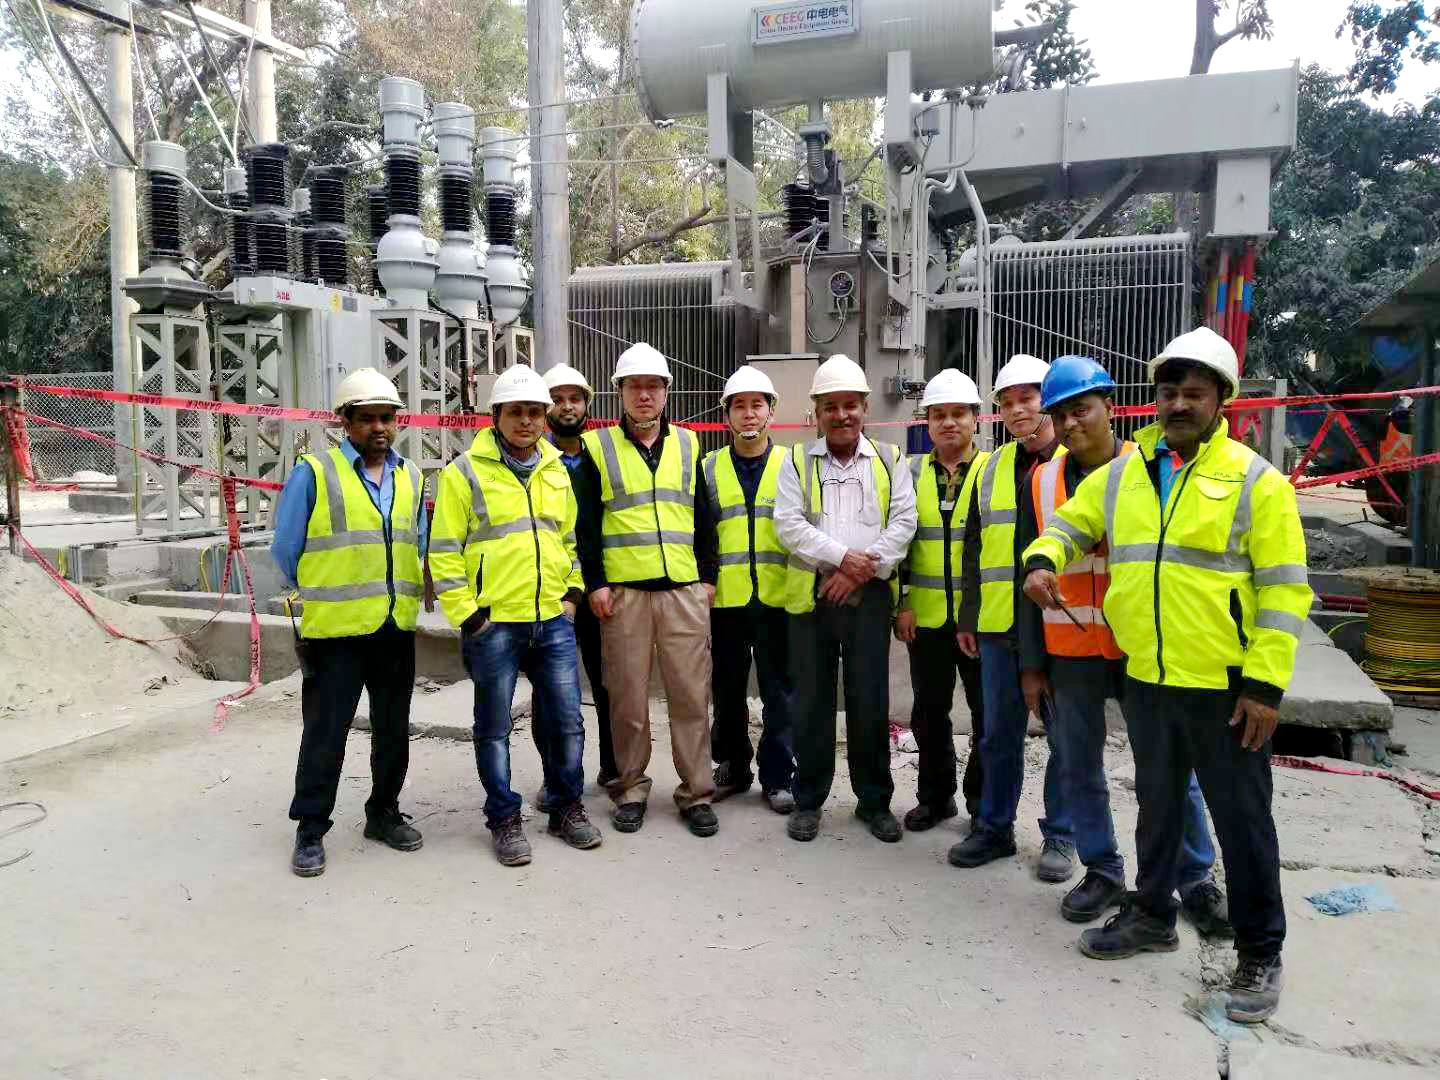 得润电气开关柜孟加拉海德堡发电站供电成功    Anhui Derun Electric’s switch cabinet successfully powered up Heidelberg Power Station in Bangladesh